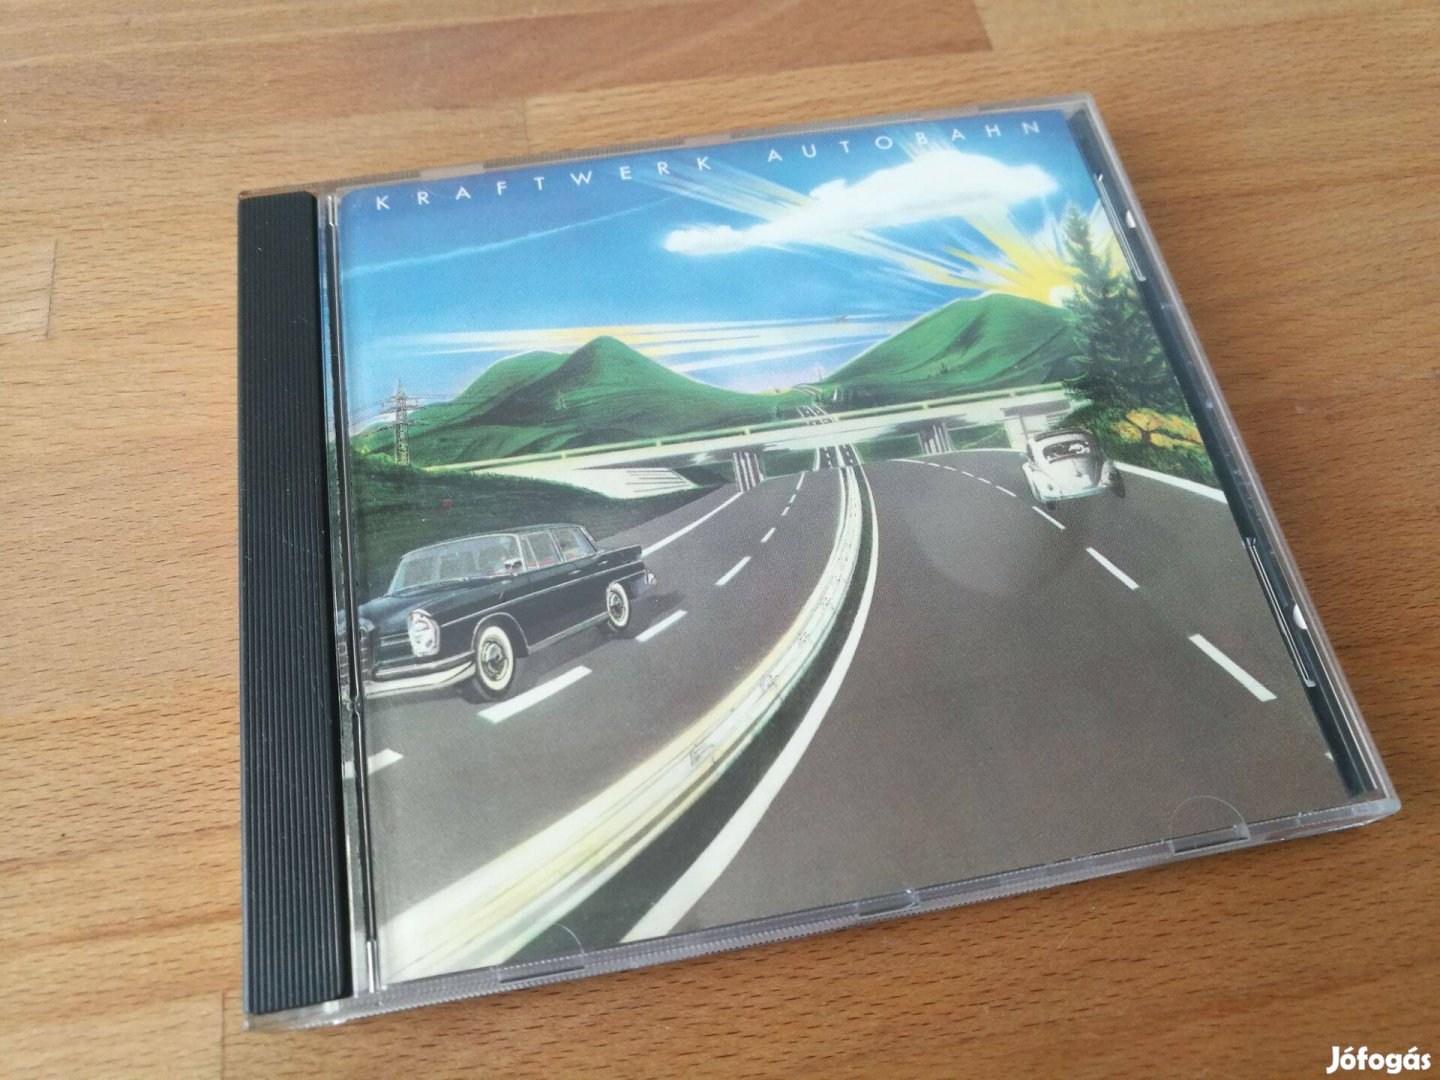 Kraftwerk - Autobahn (Electra/Asylum Records, USA, New York, 1985, CD)